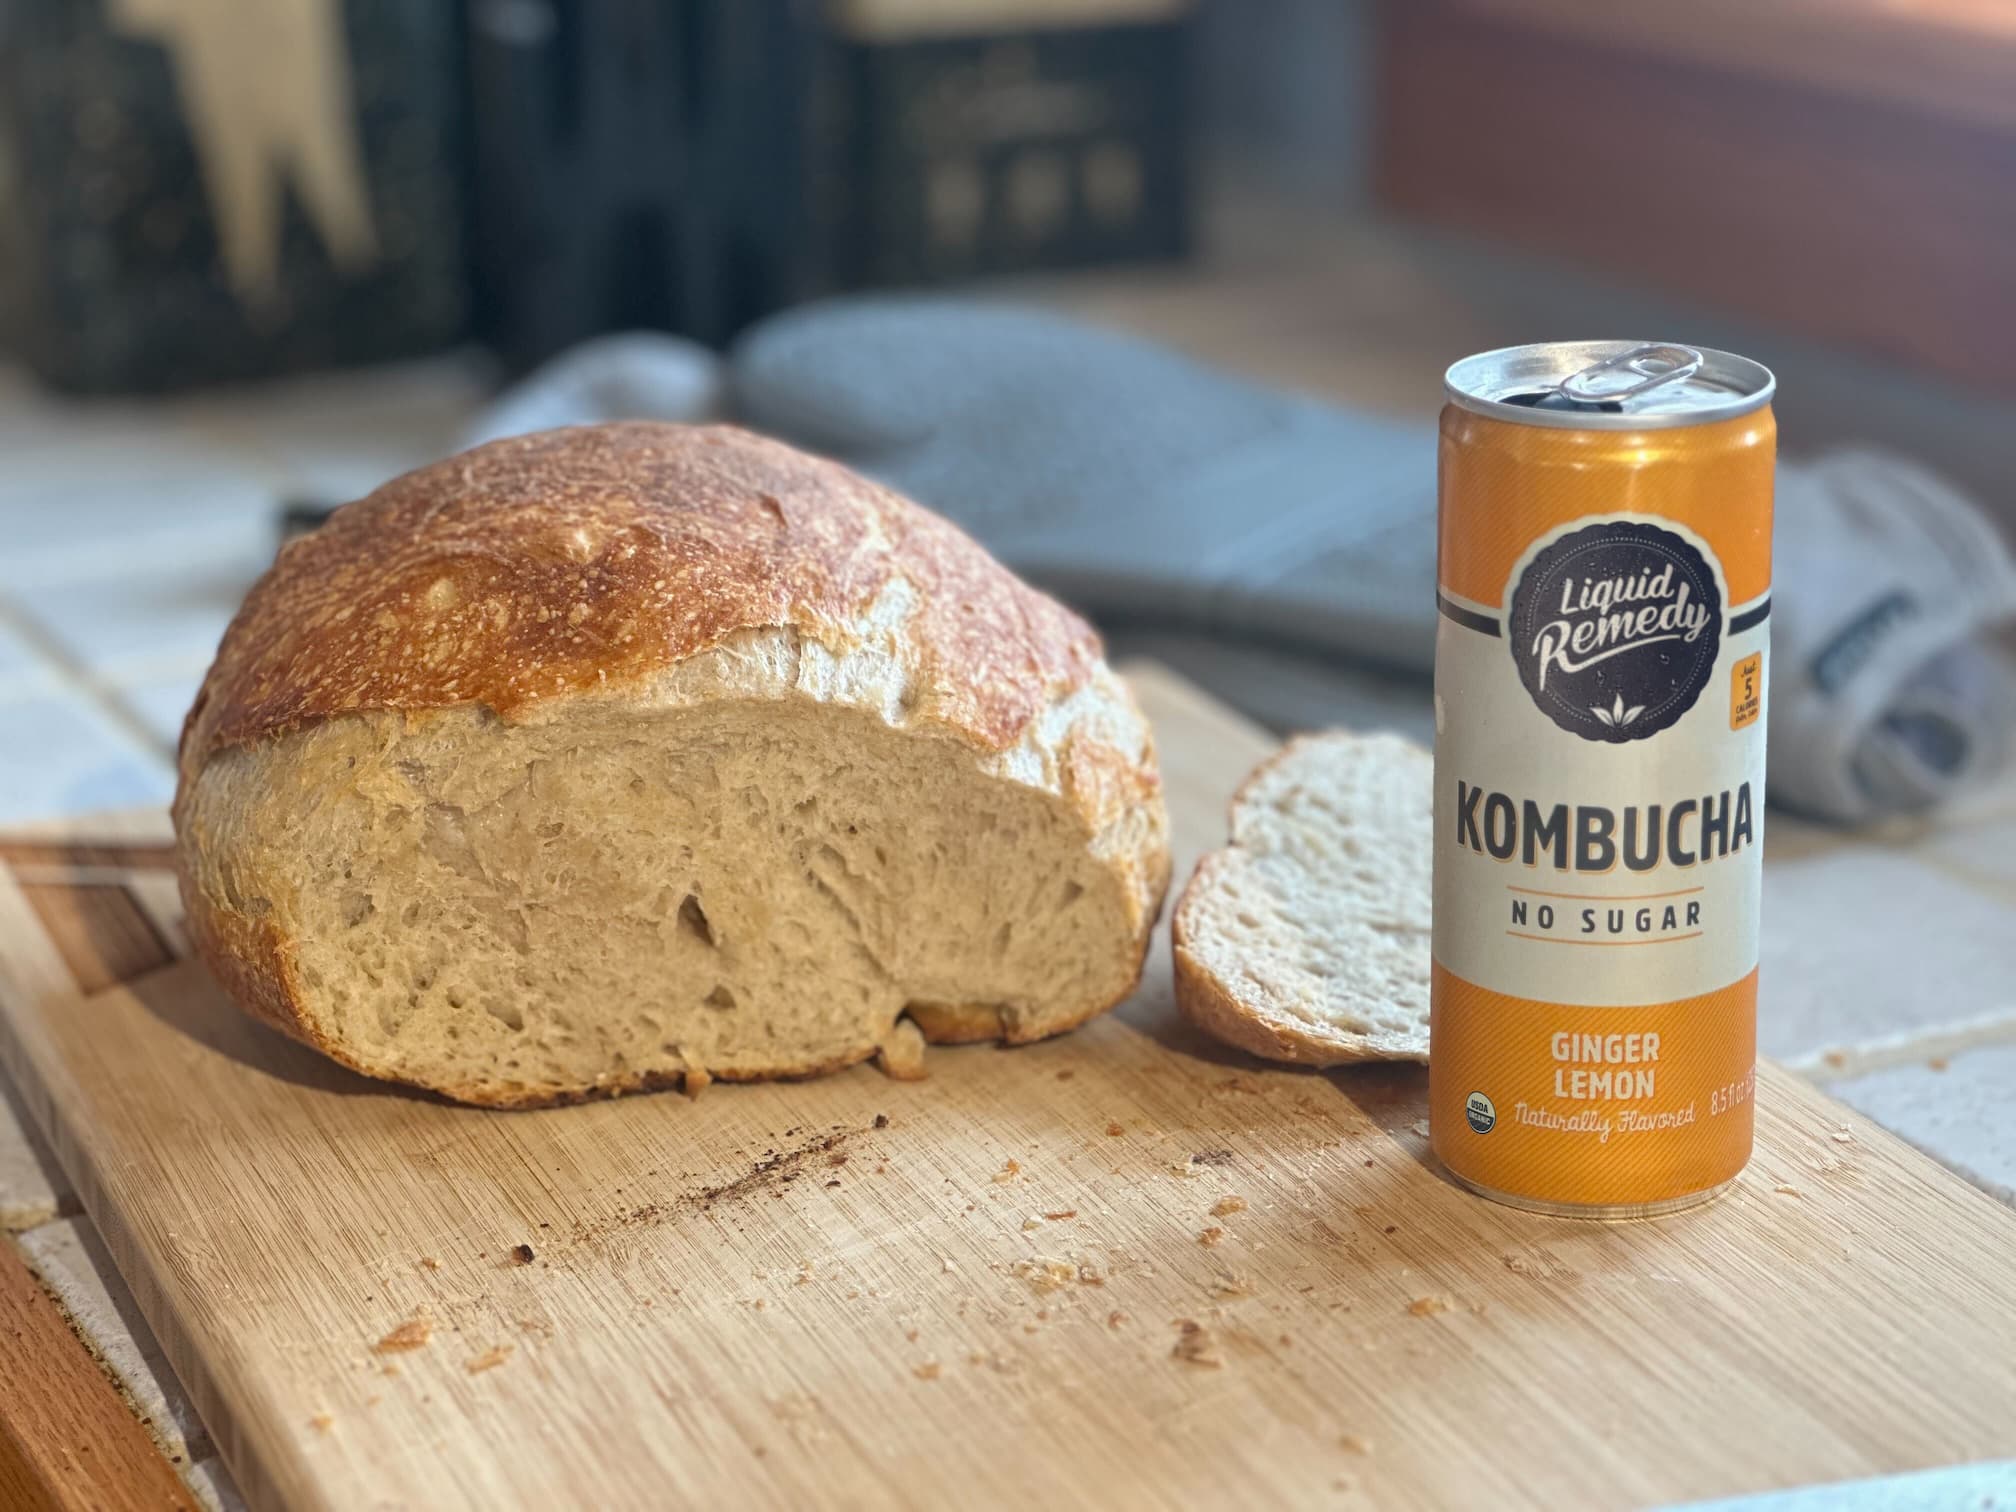 Liquid Remedy Kombucha next to sourdough bread